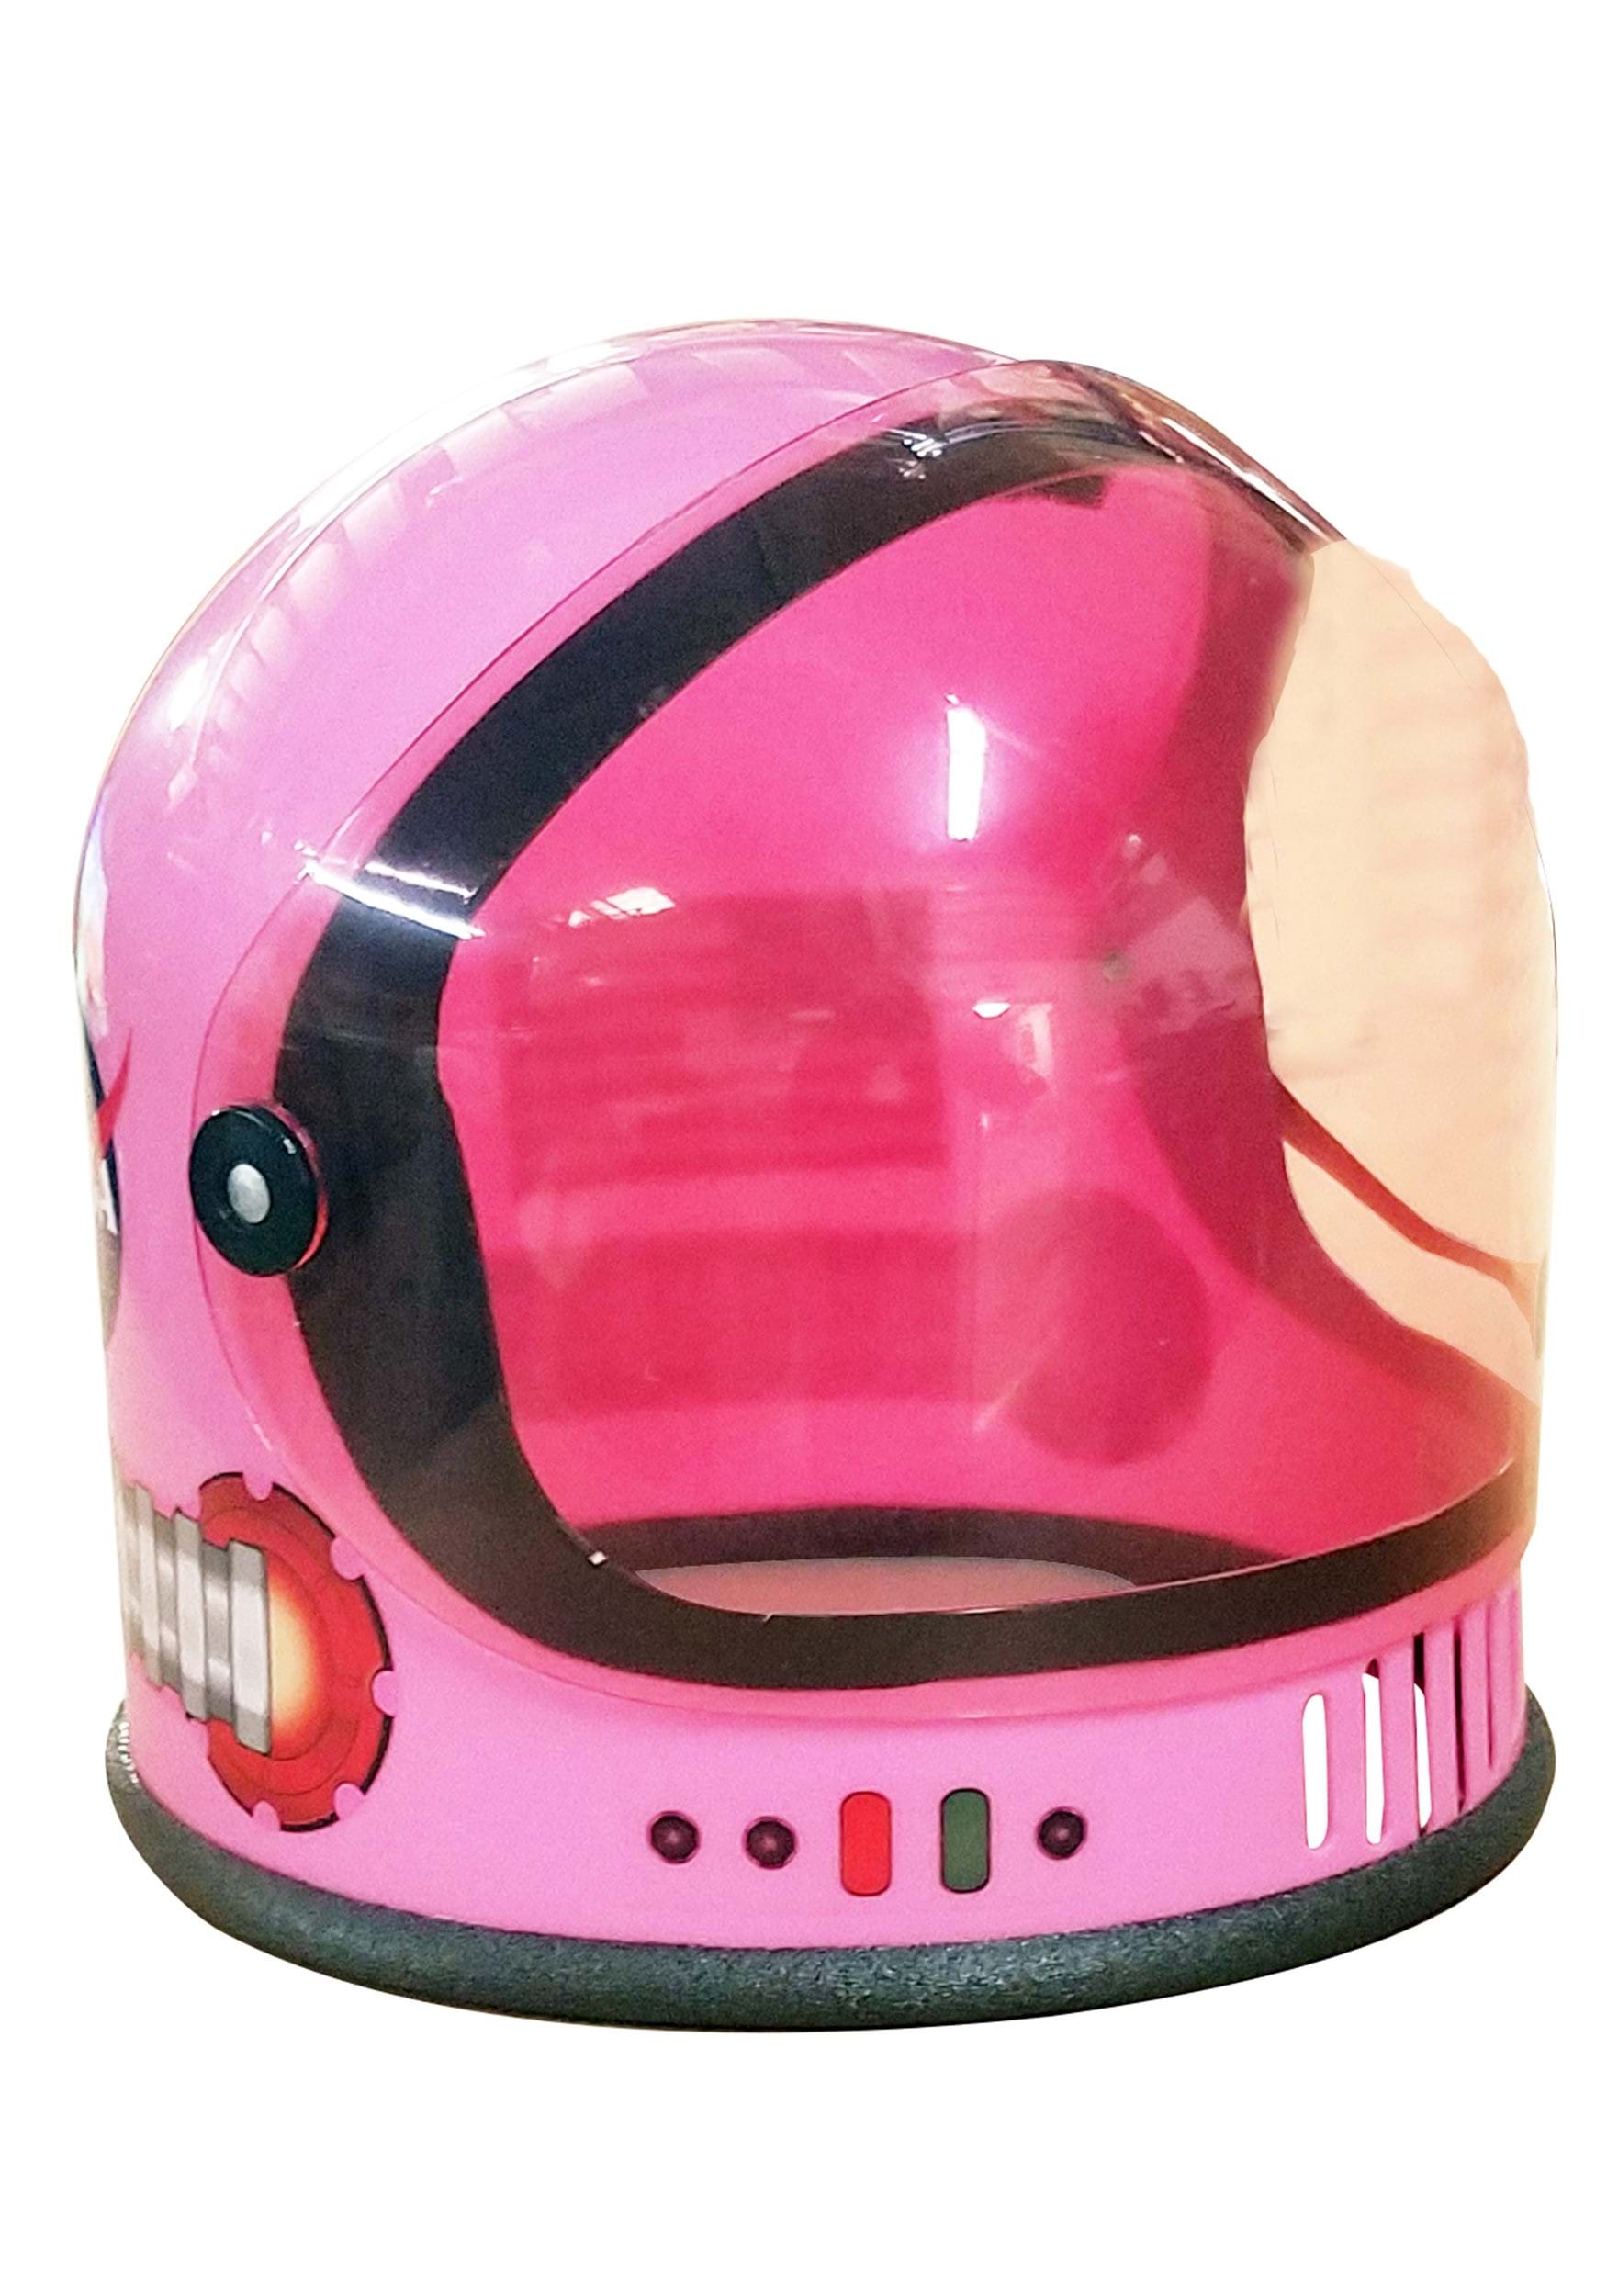 Casco de astronauta de niña rosa Multicolor Colombia